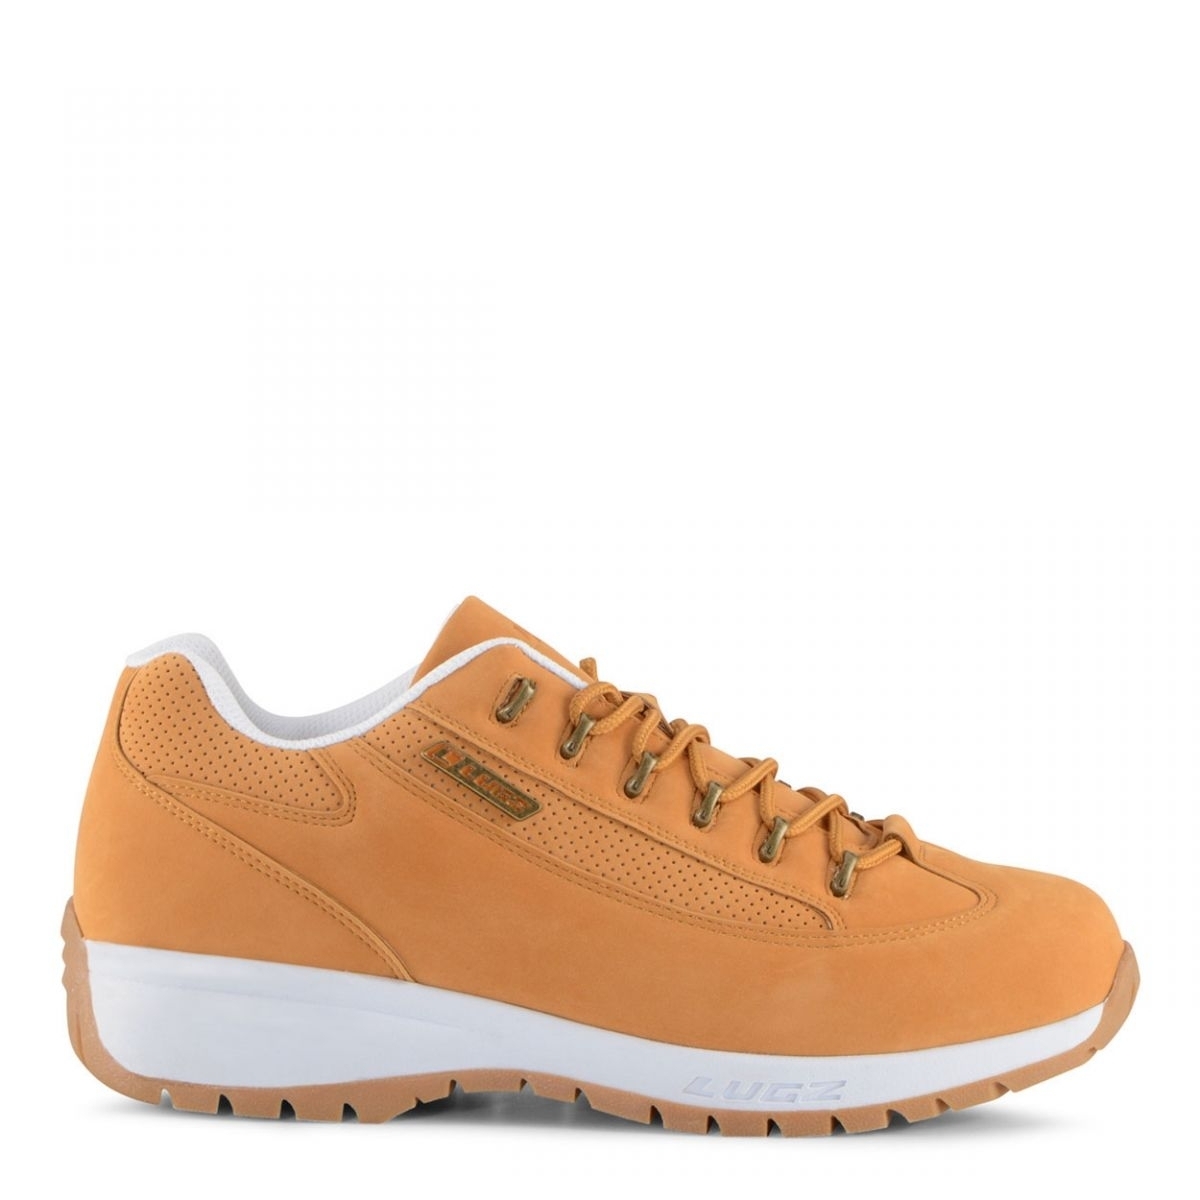 Lugz Men's Express Sneakers Golden Wheat/White - MEXPRSPK-714 Golden Wheat/White/Gum - Golden Wheat/White/Gum, 8.5